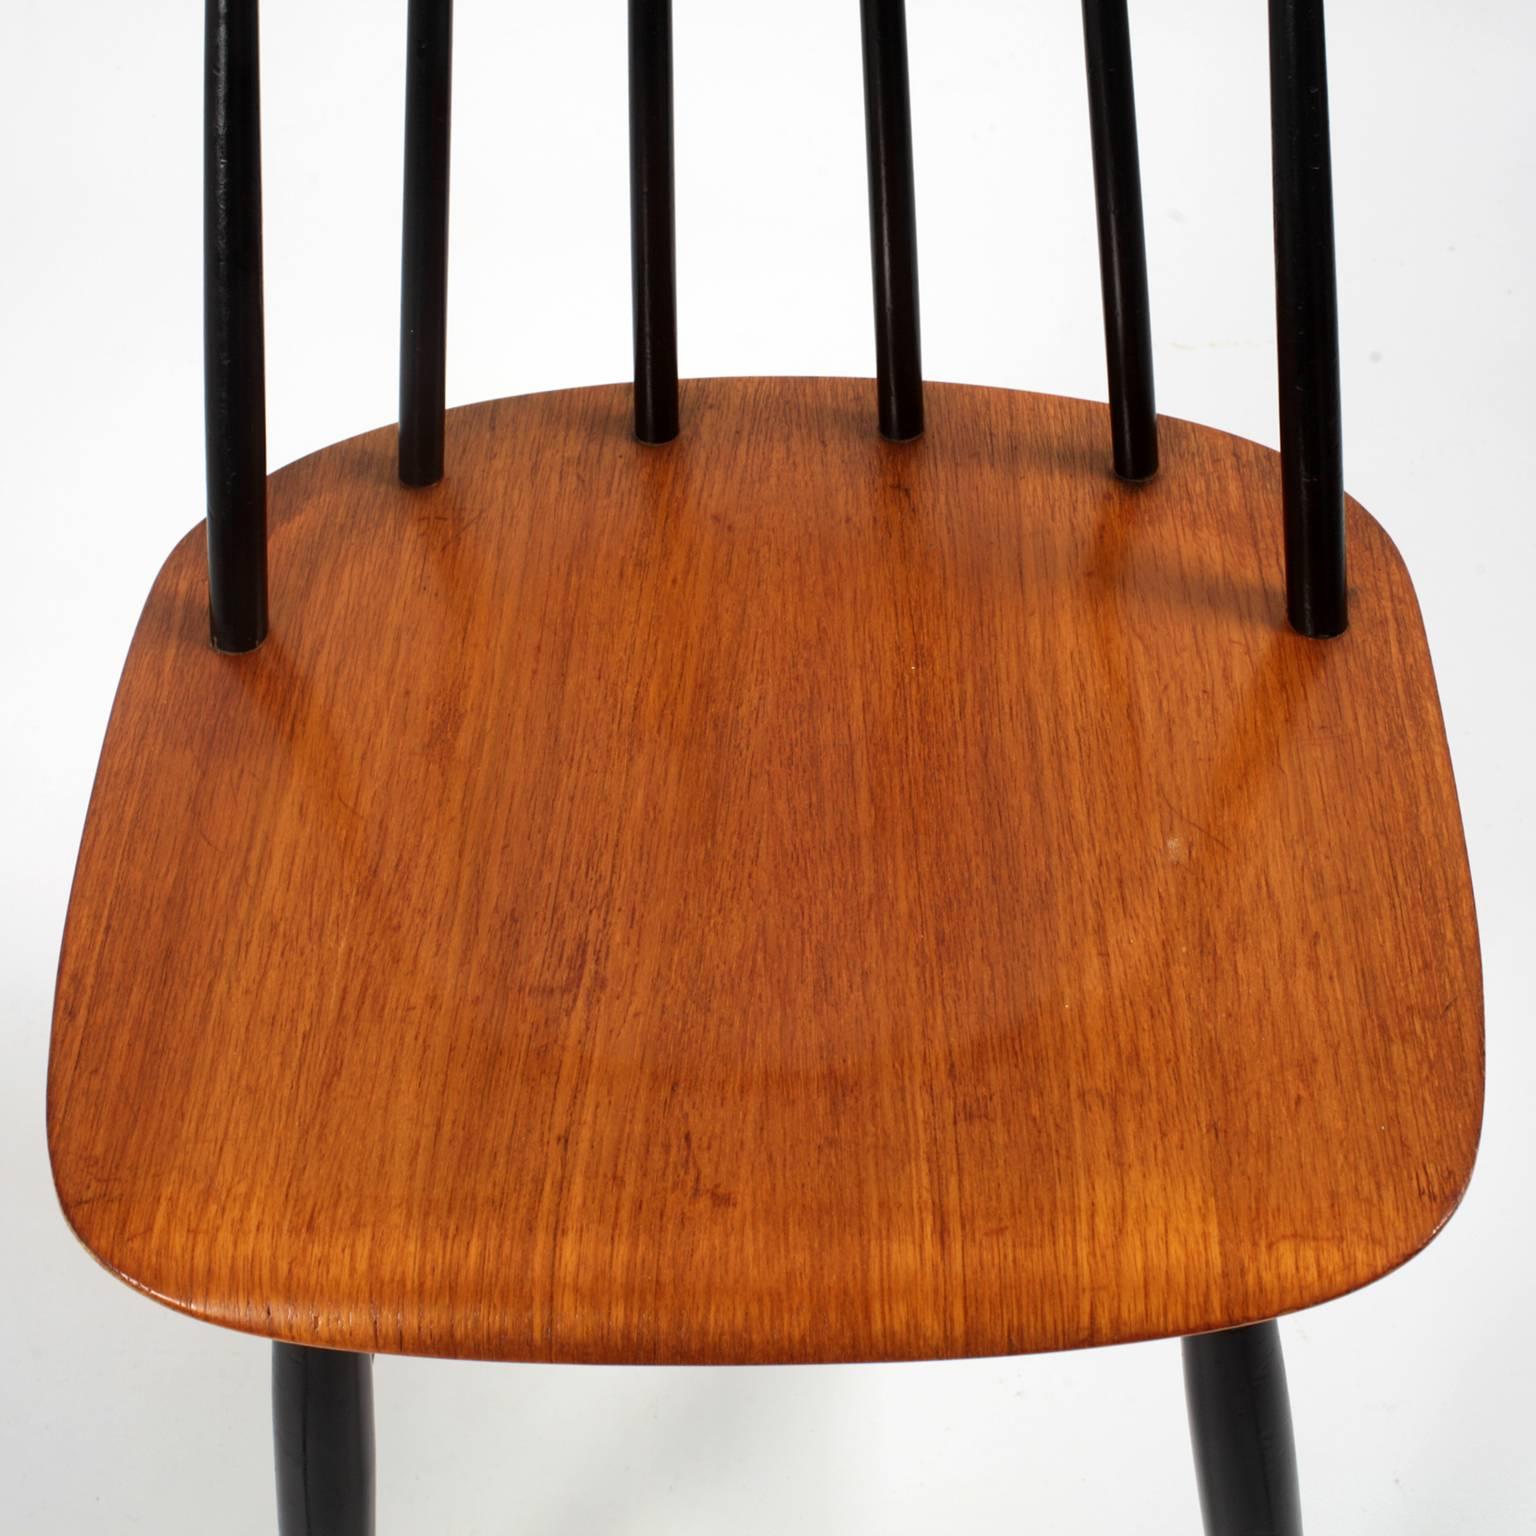 Mid-20th Century Four Fanett Chairs or T55, Ilmari Tapiovaara for Edsby Verken Sweden Design 1949